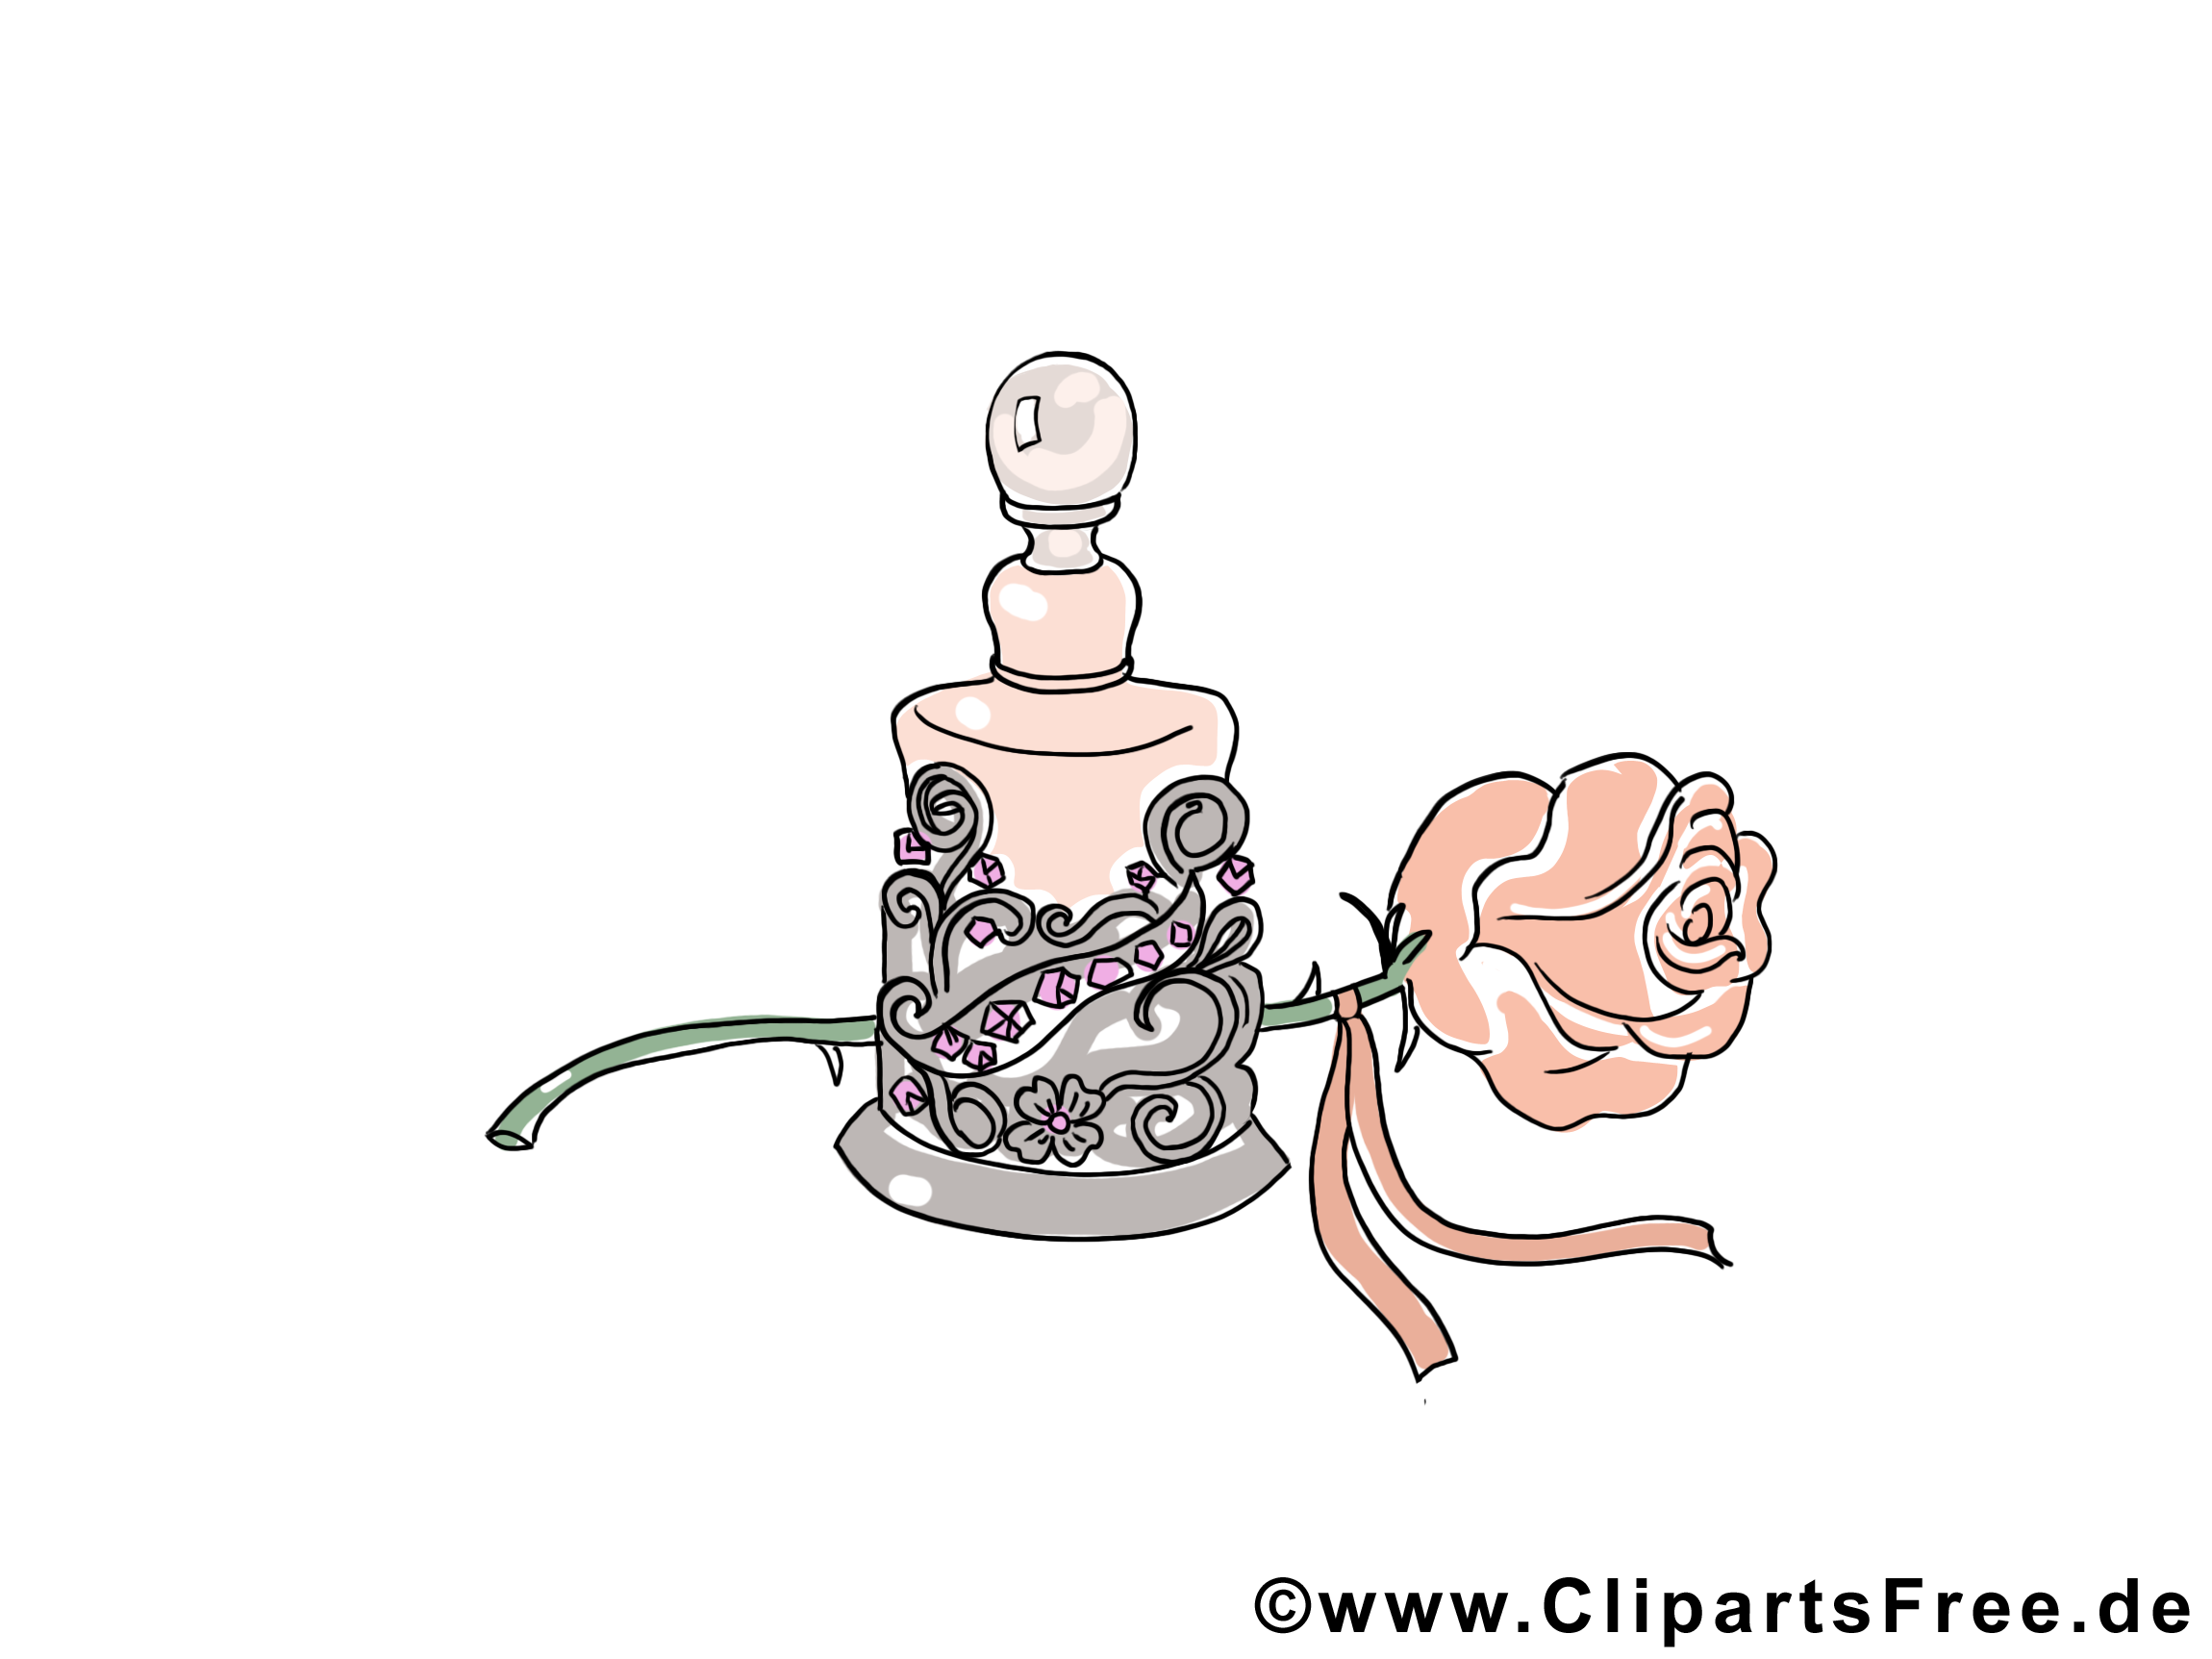 Parfum illustration - Rose images gratuites